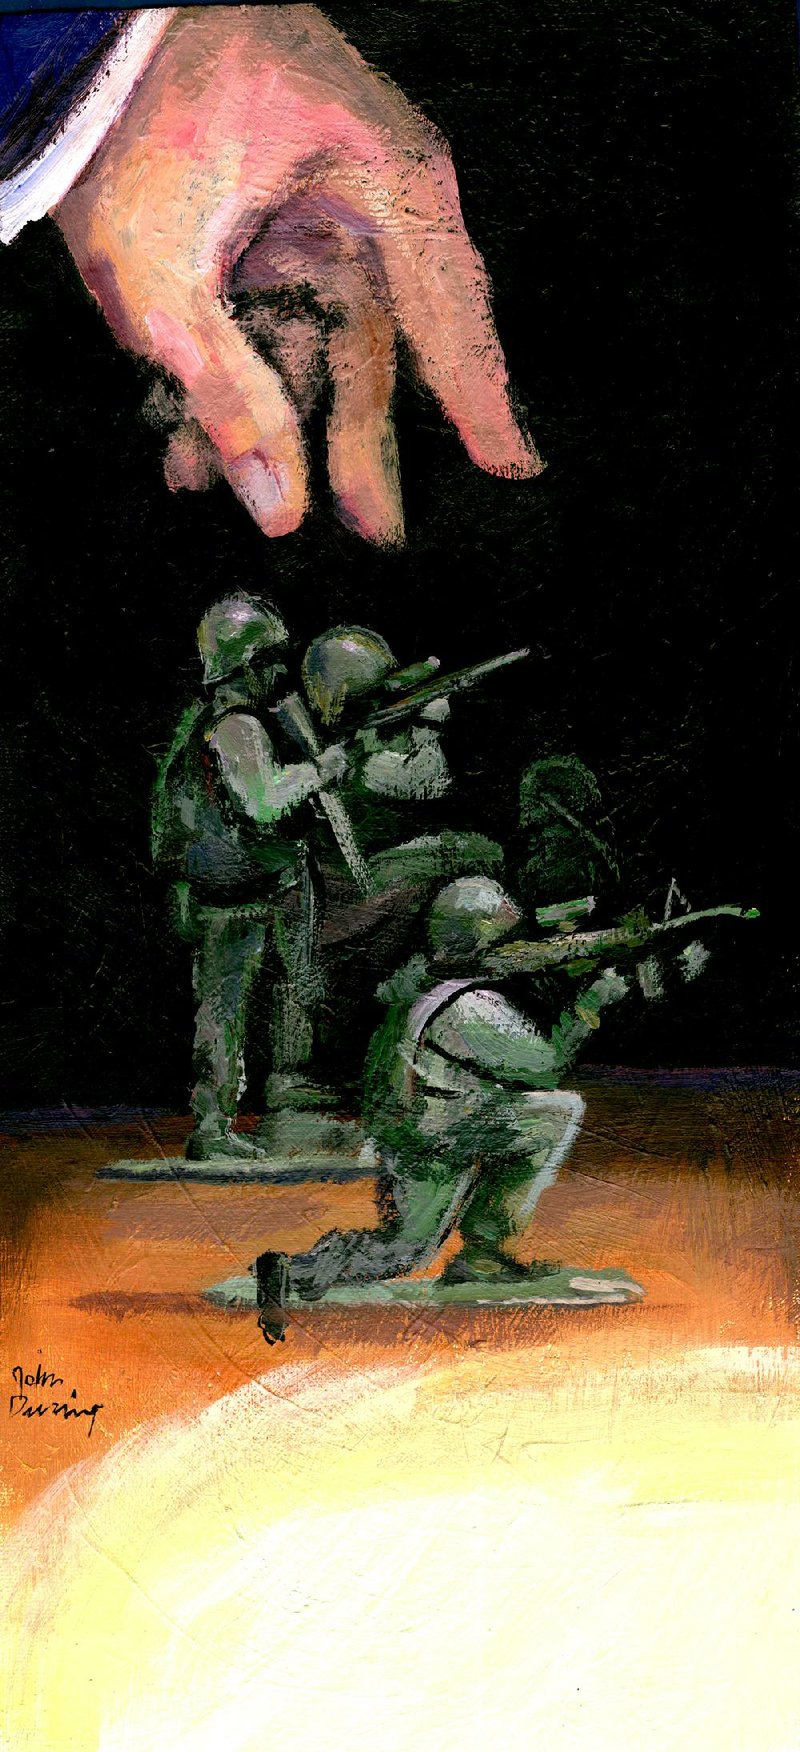 Arkansas Democrat-Gazette Army illustration. 